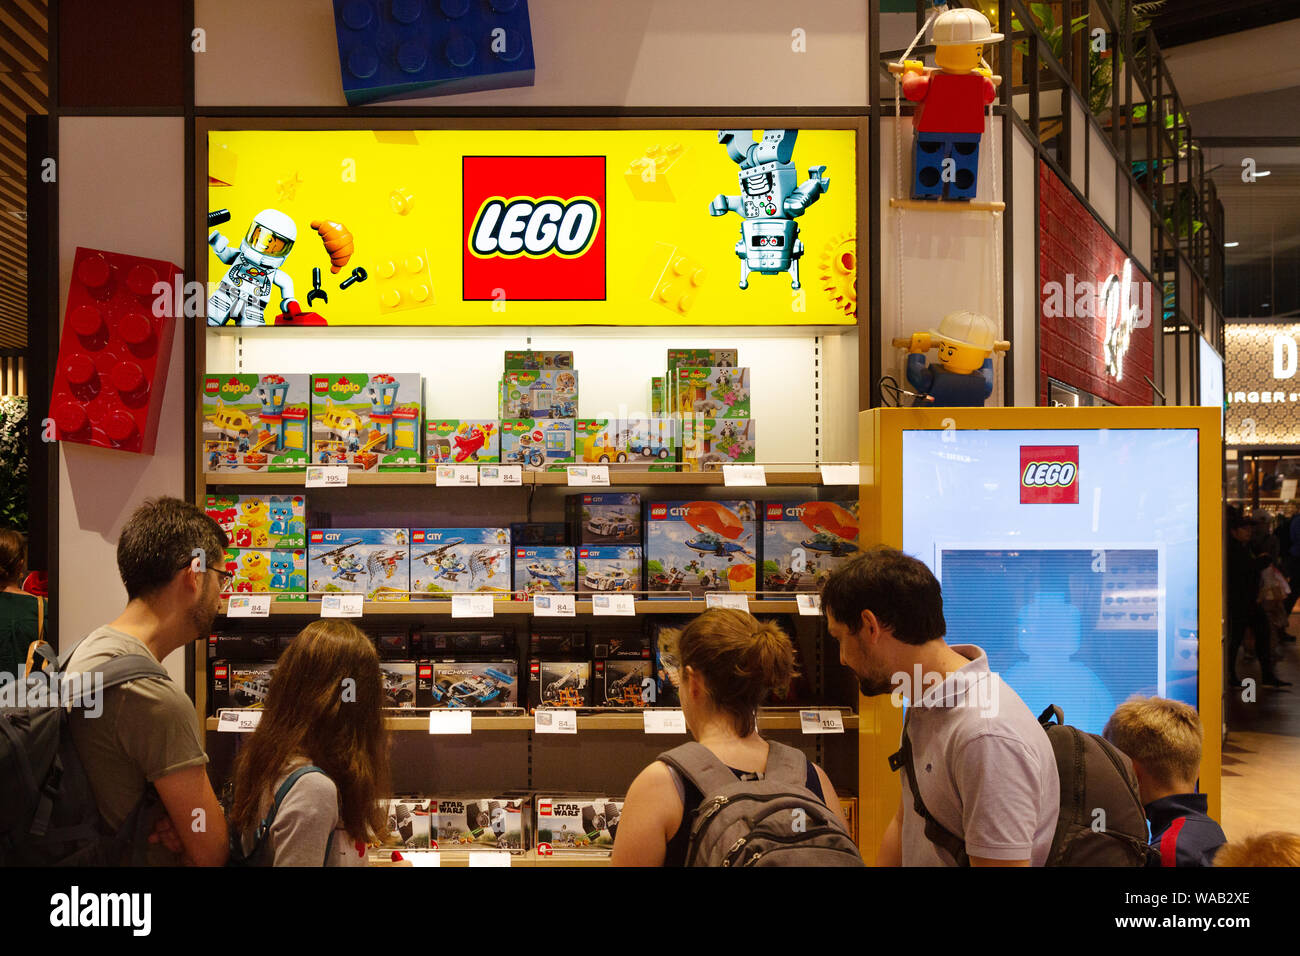 Lego Denmark - people buying lego a shop, Copenhagen airport, Copenhagen, Denmark Scandinavia Stock Photo - Alamy